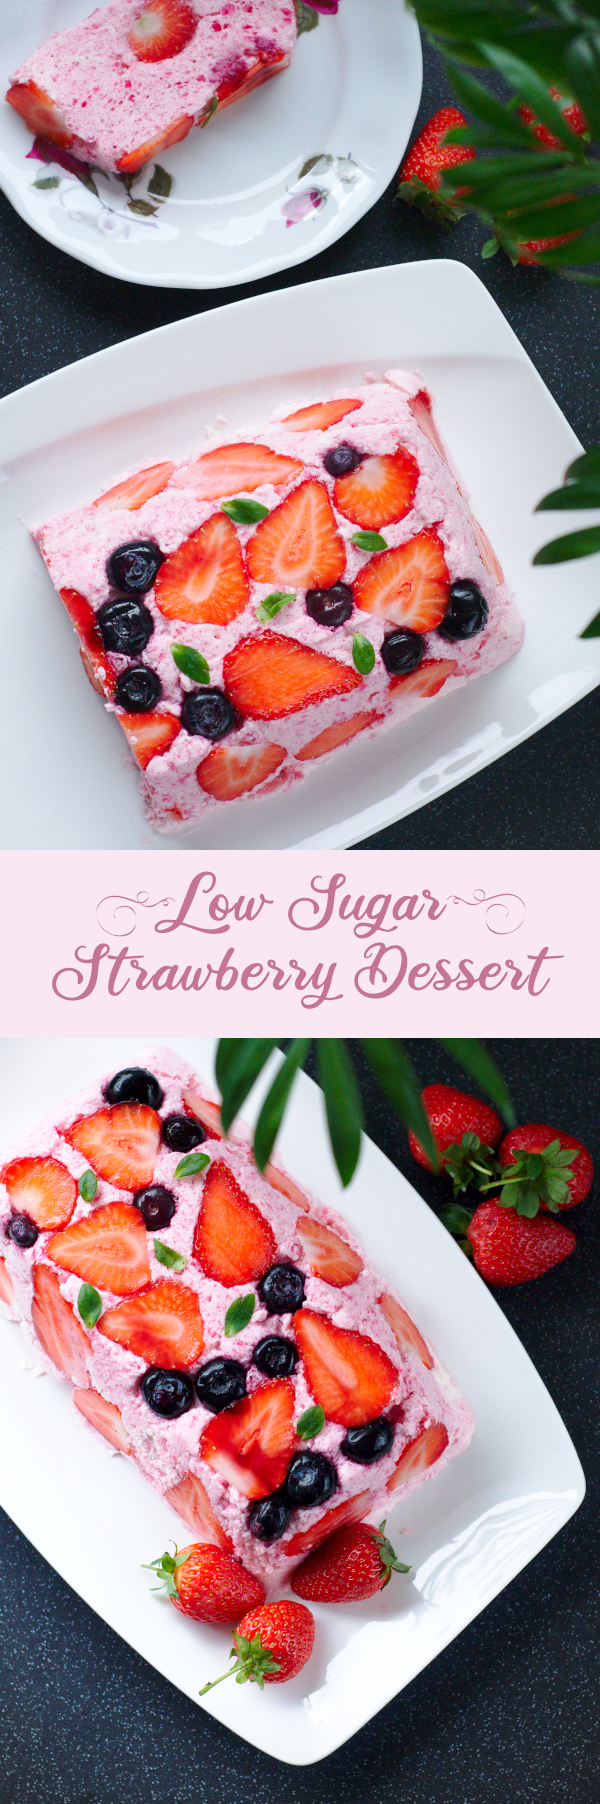 low sugar strawberry dessert